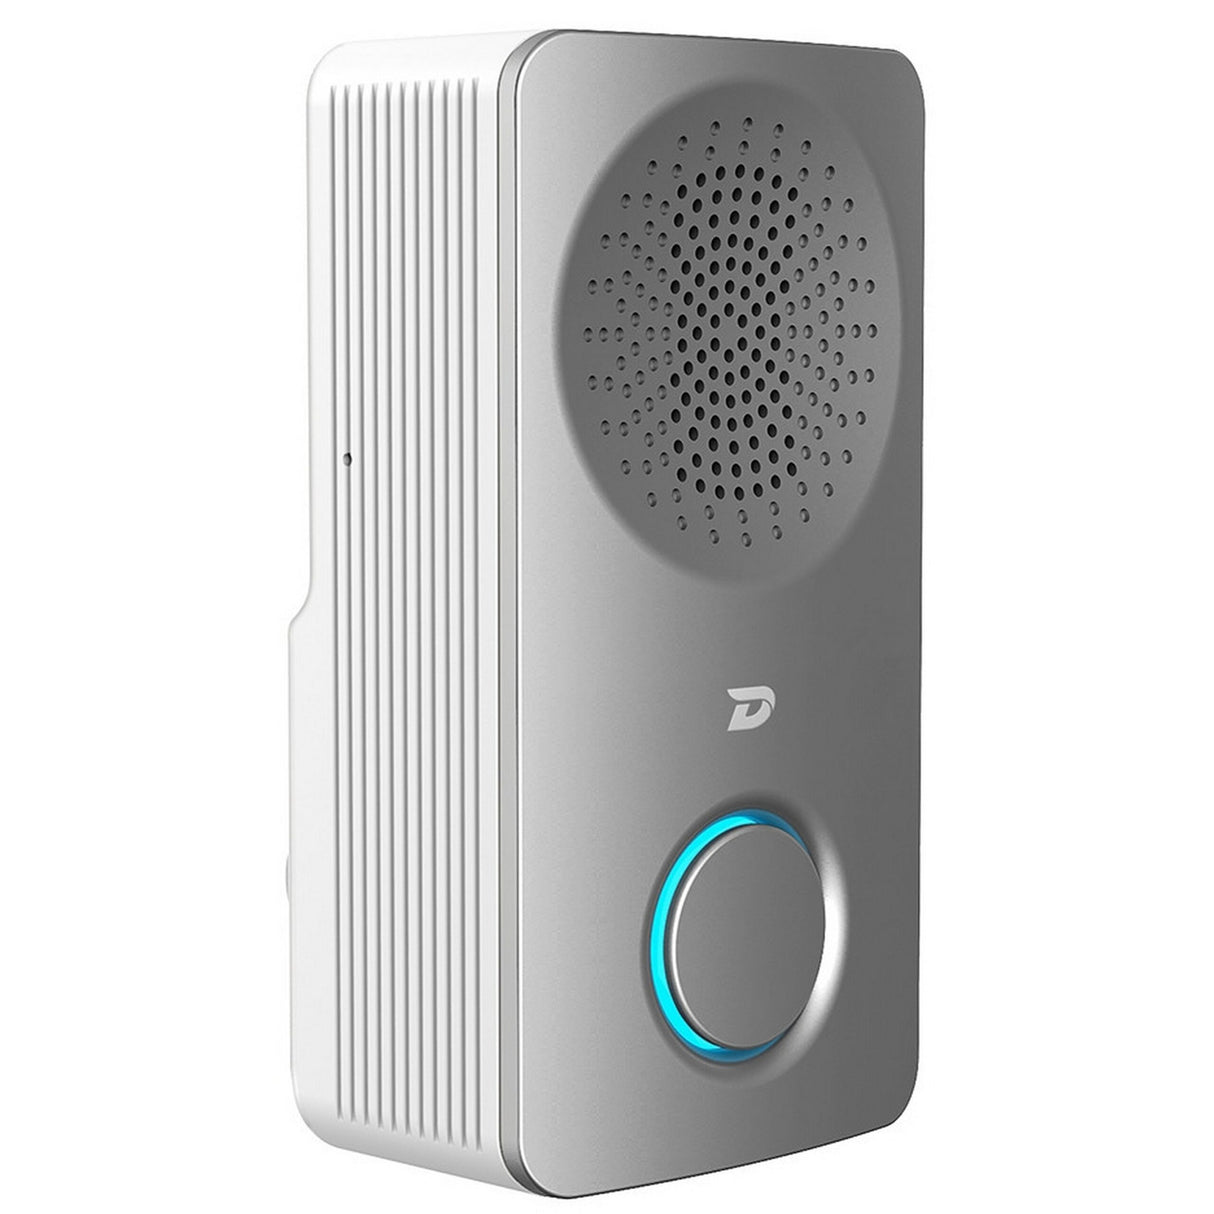 IC Realtime Singer Wireless Door Chime for Dinger